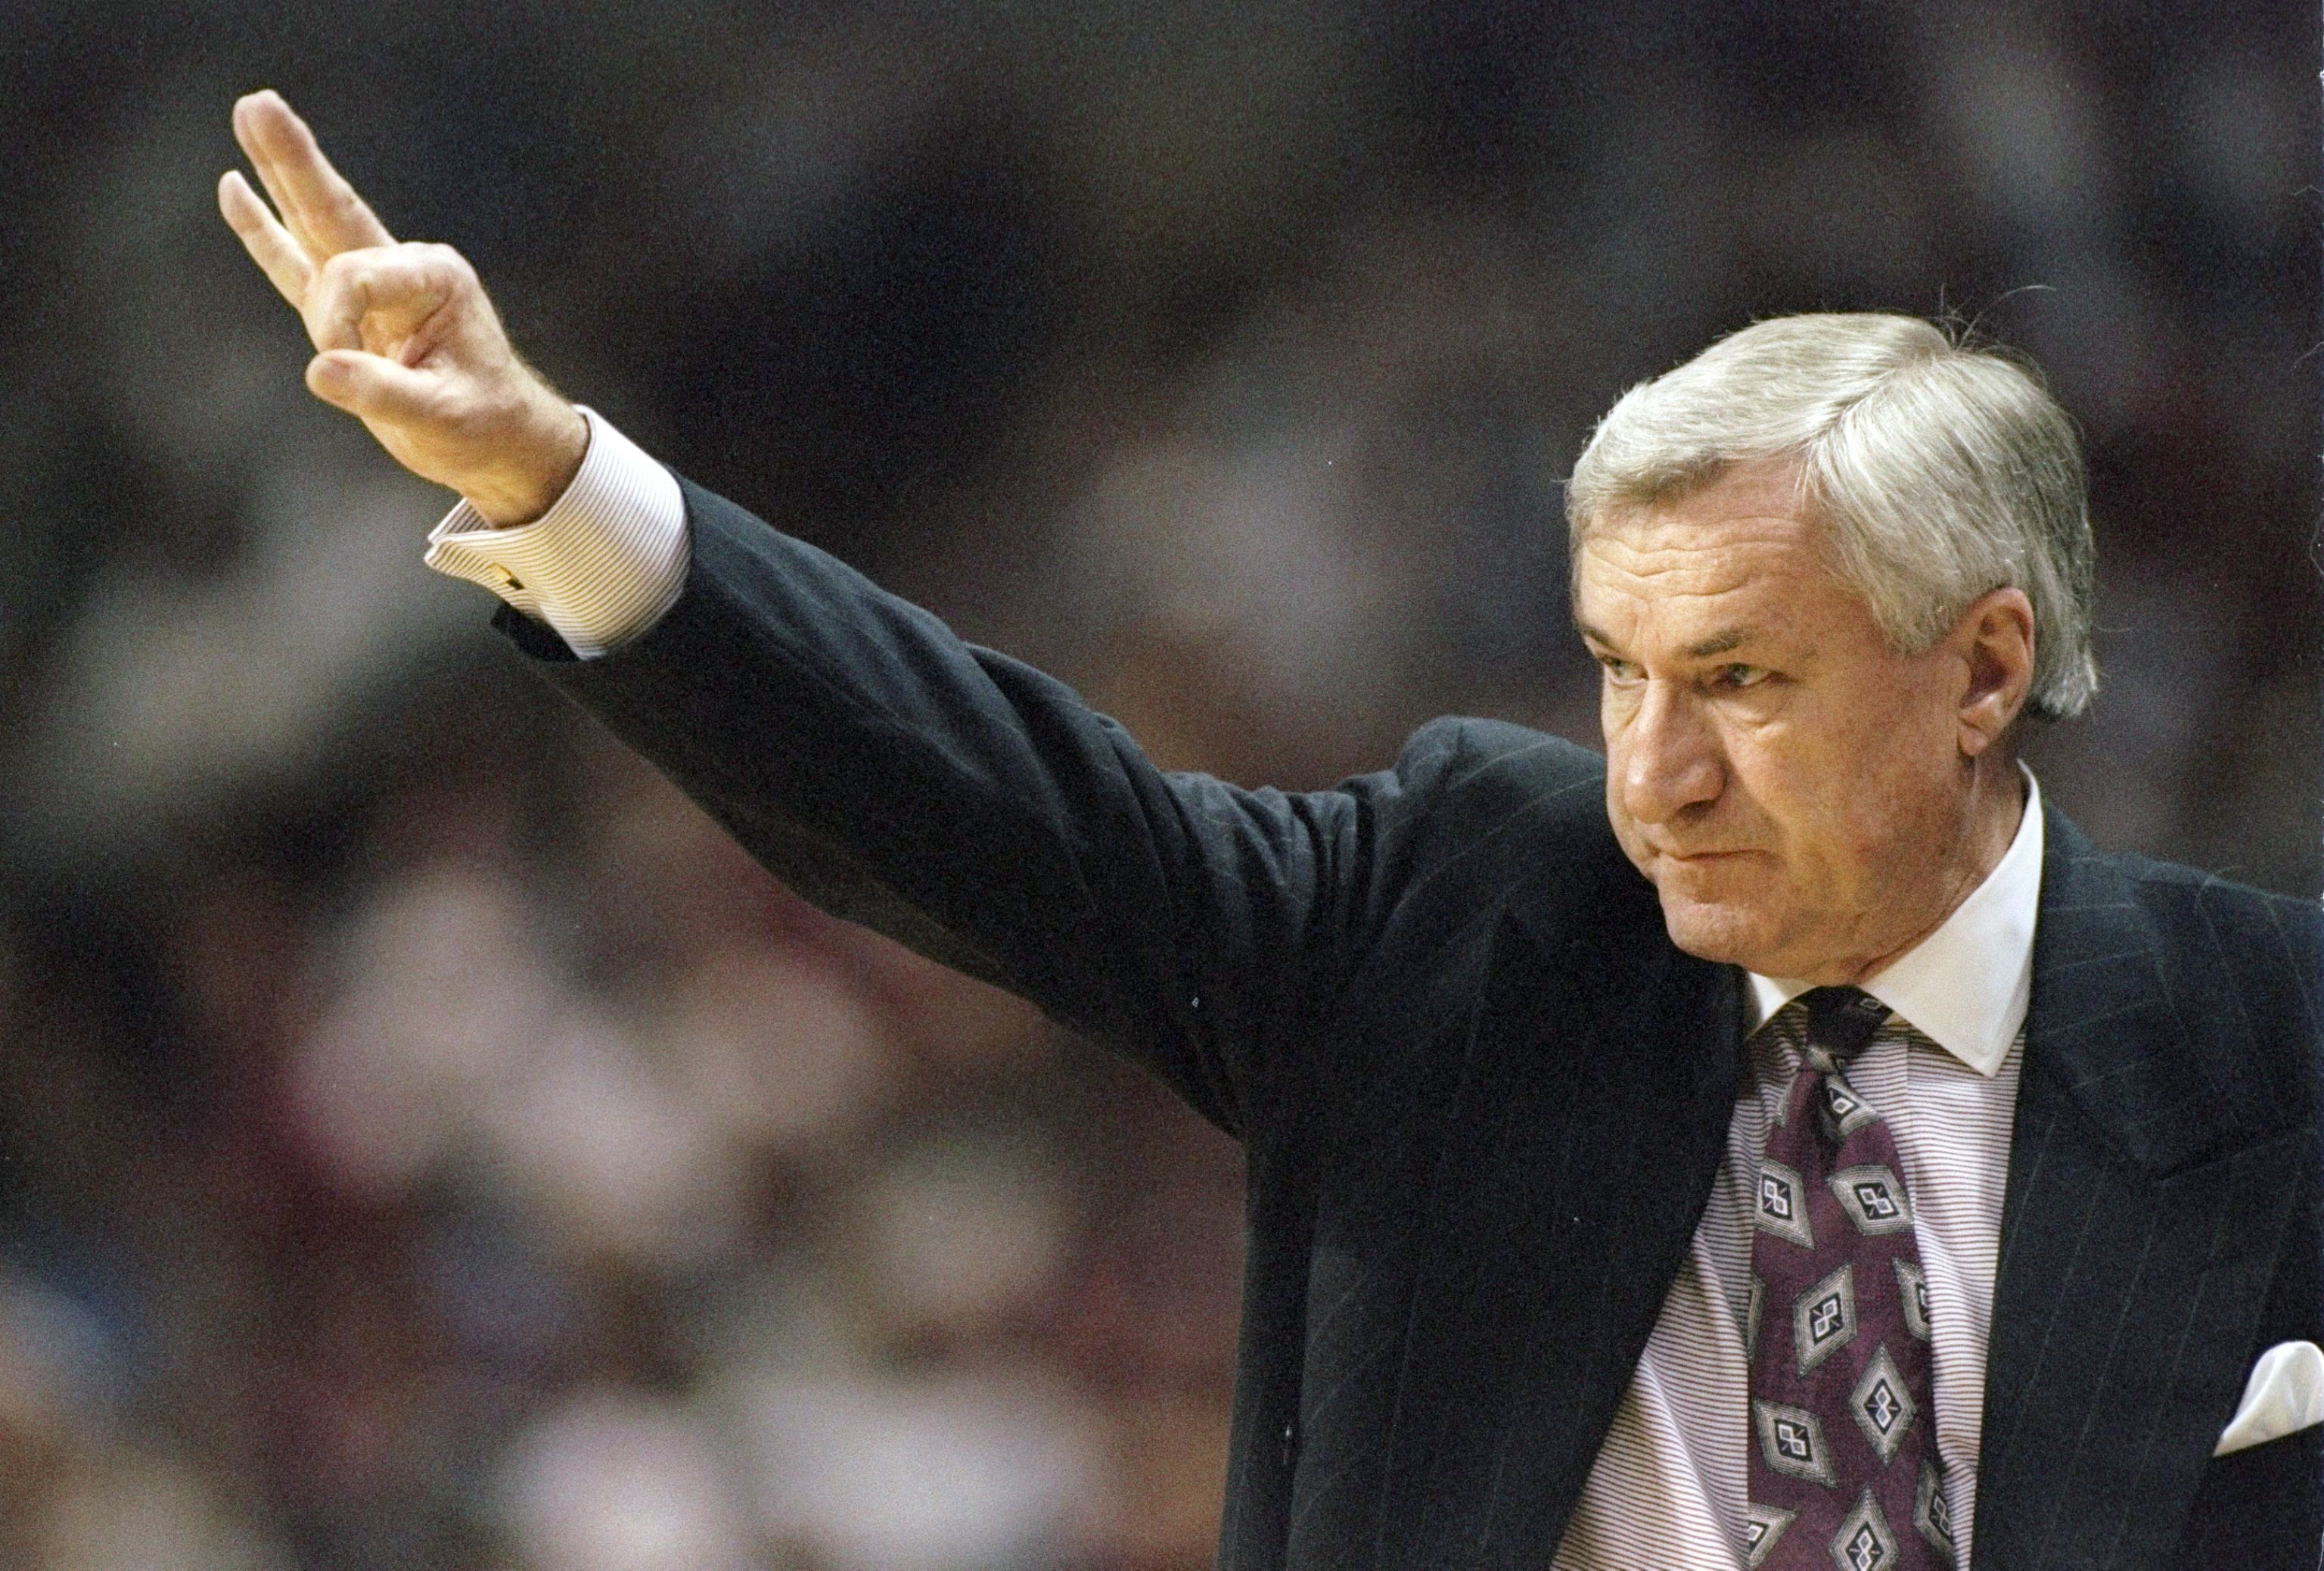 UNC basketball legend Dean Smith dies, university says | CNN